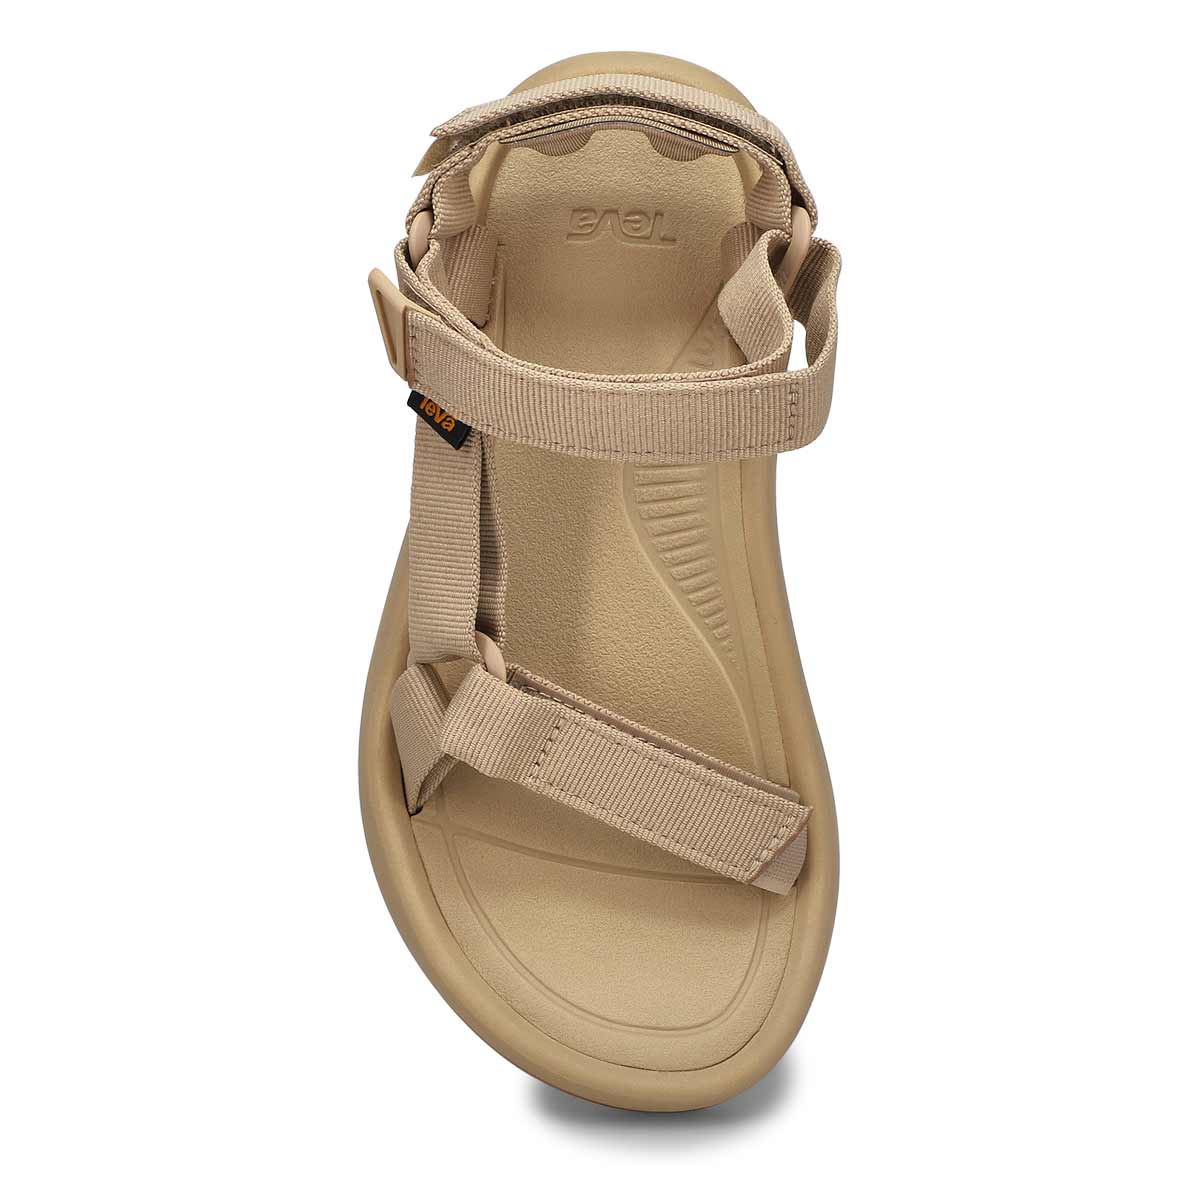 Sandale HURRICANE XL T2 AMPSOLE, femmes